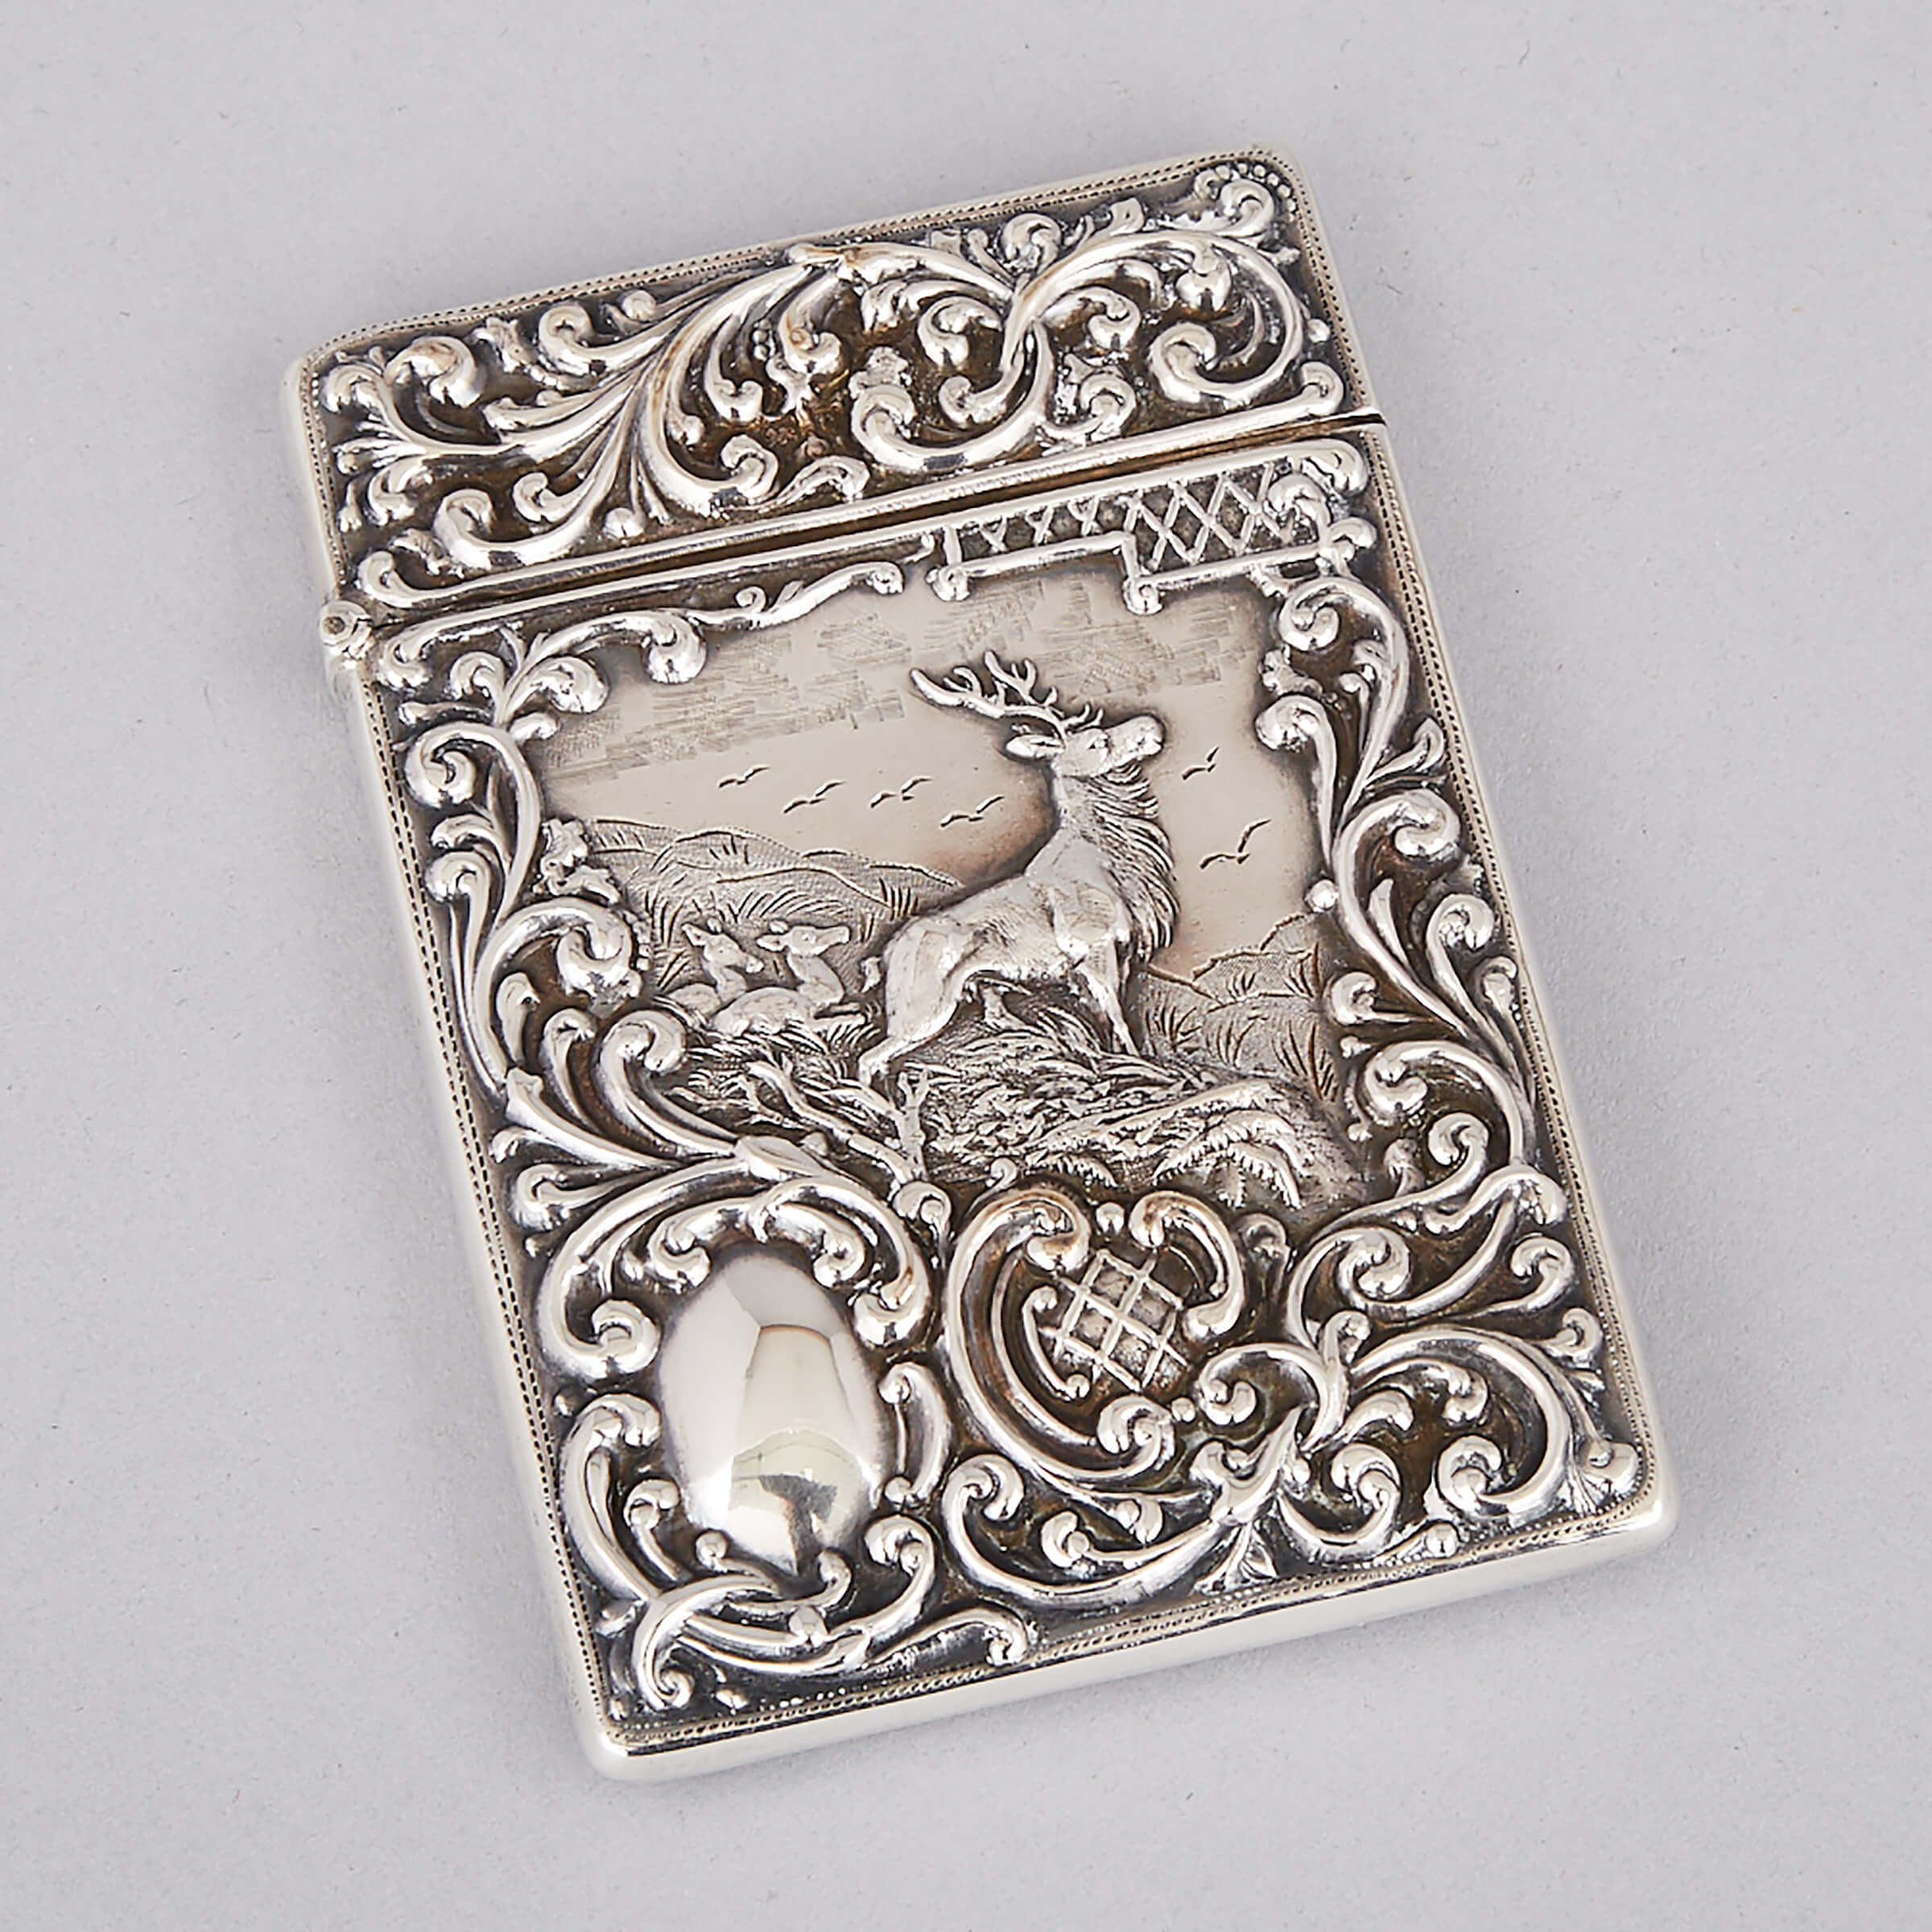 Edwardian Silver Repoussé ‘Stag’ Card Case, Harold Crisford & William Norris, Birmingham, 1902